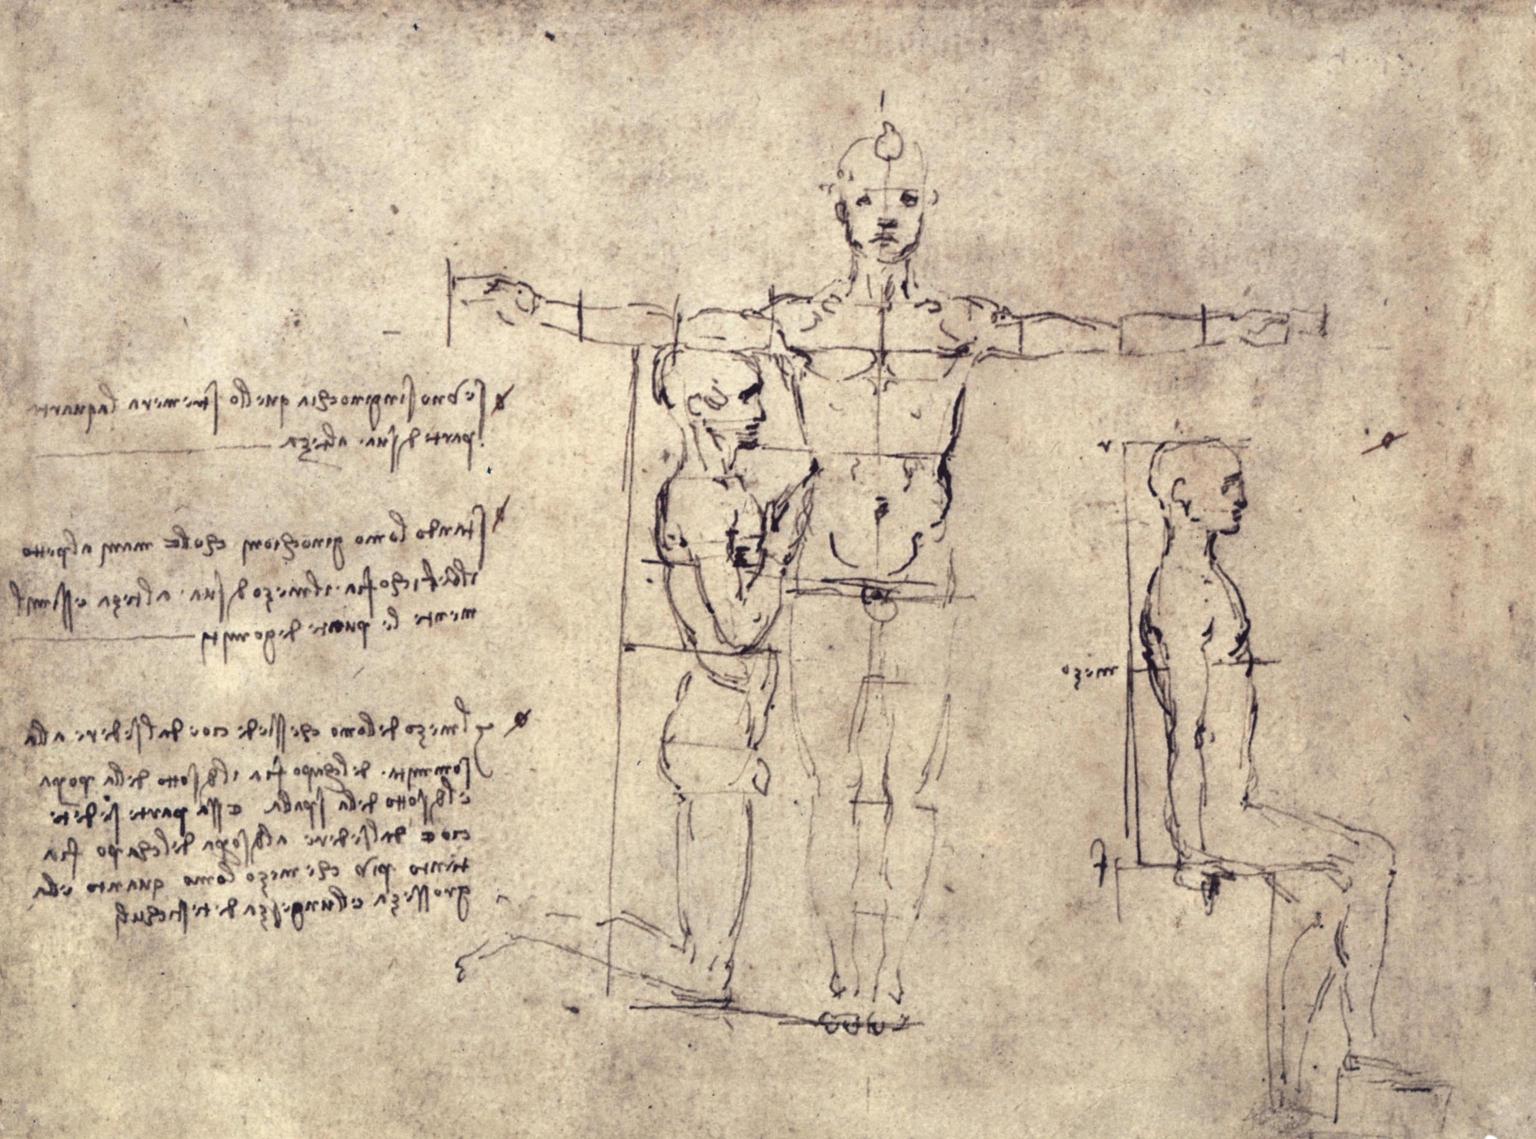 Leonardo+da+Vinci-1452-1519 (901).jpg